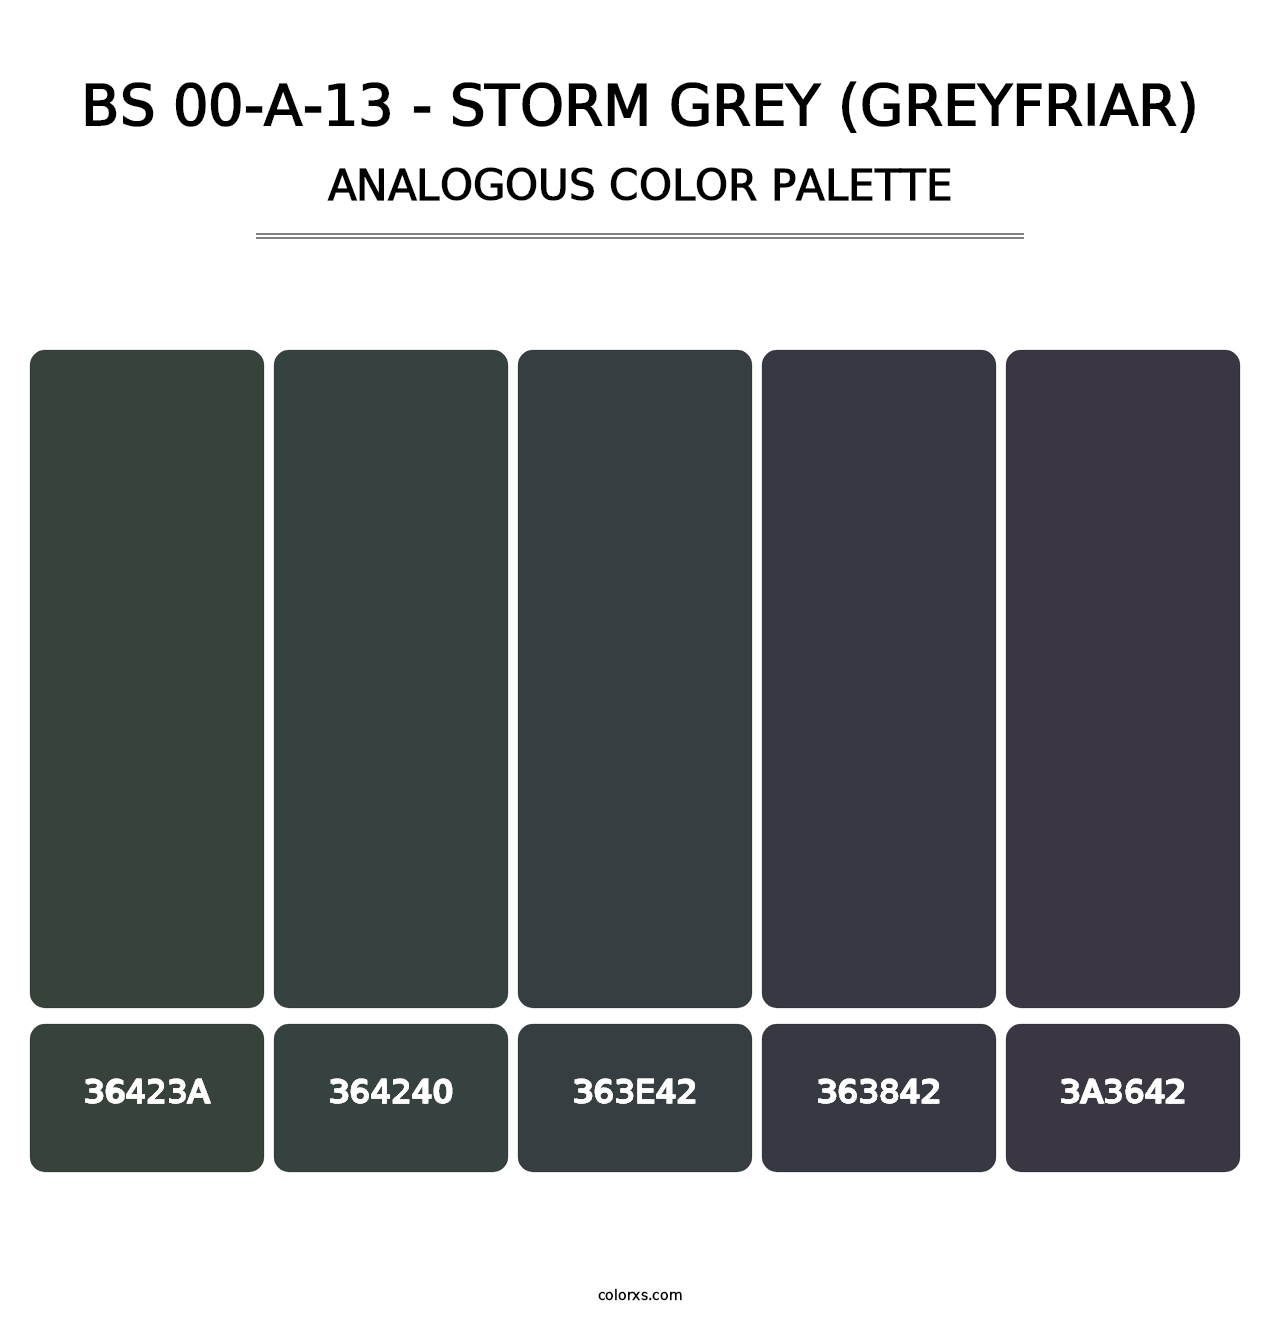 BS 00-A-13 - Storm Grey (Greyfriar) - Analogous Color Palette